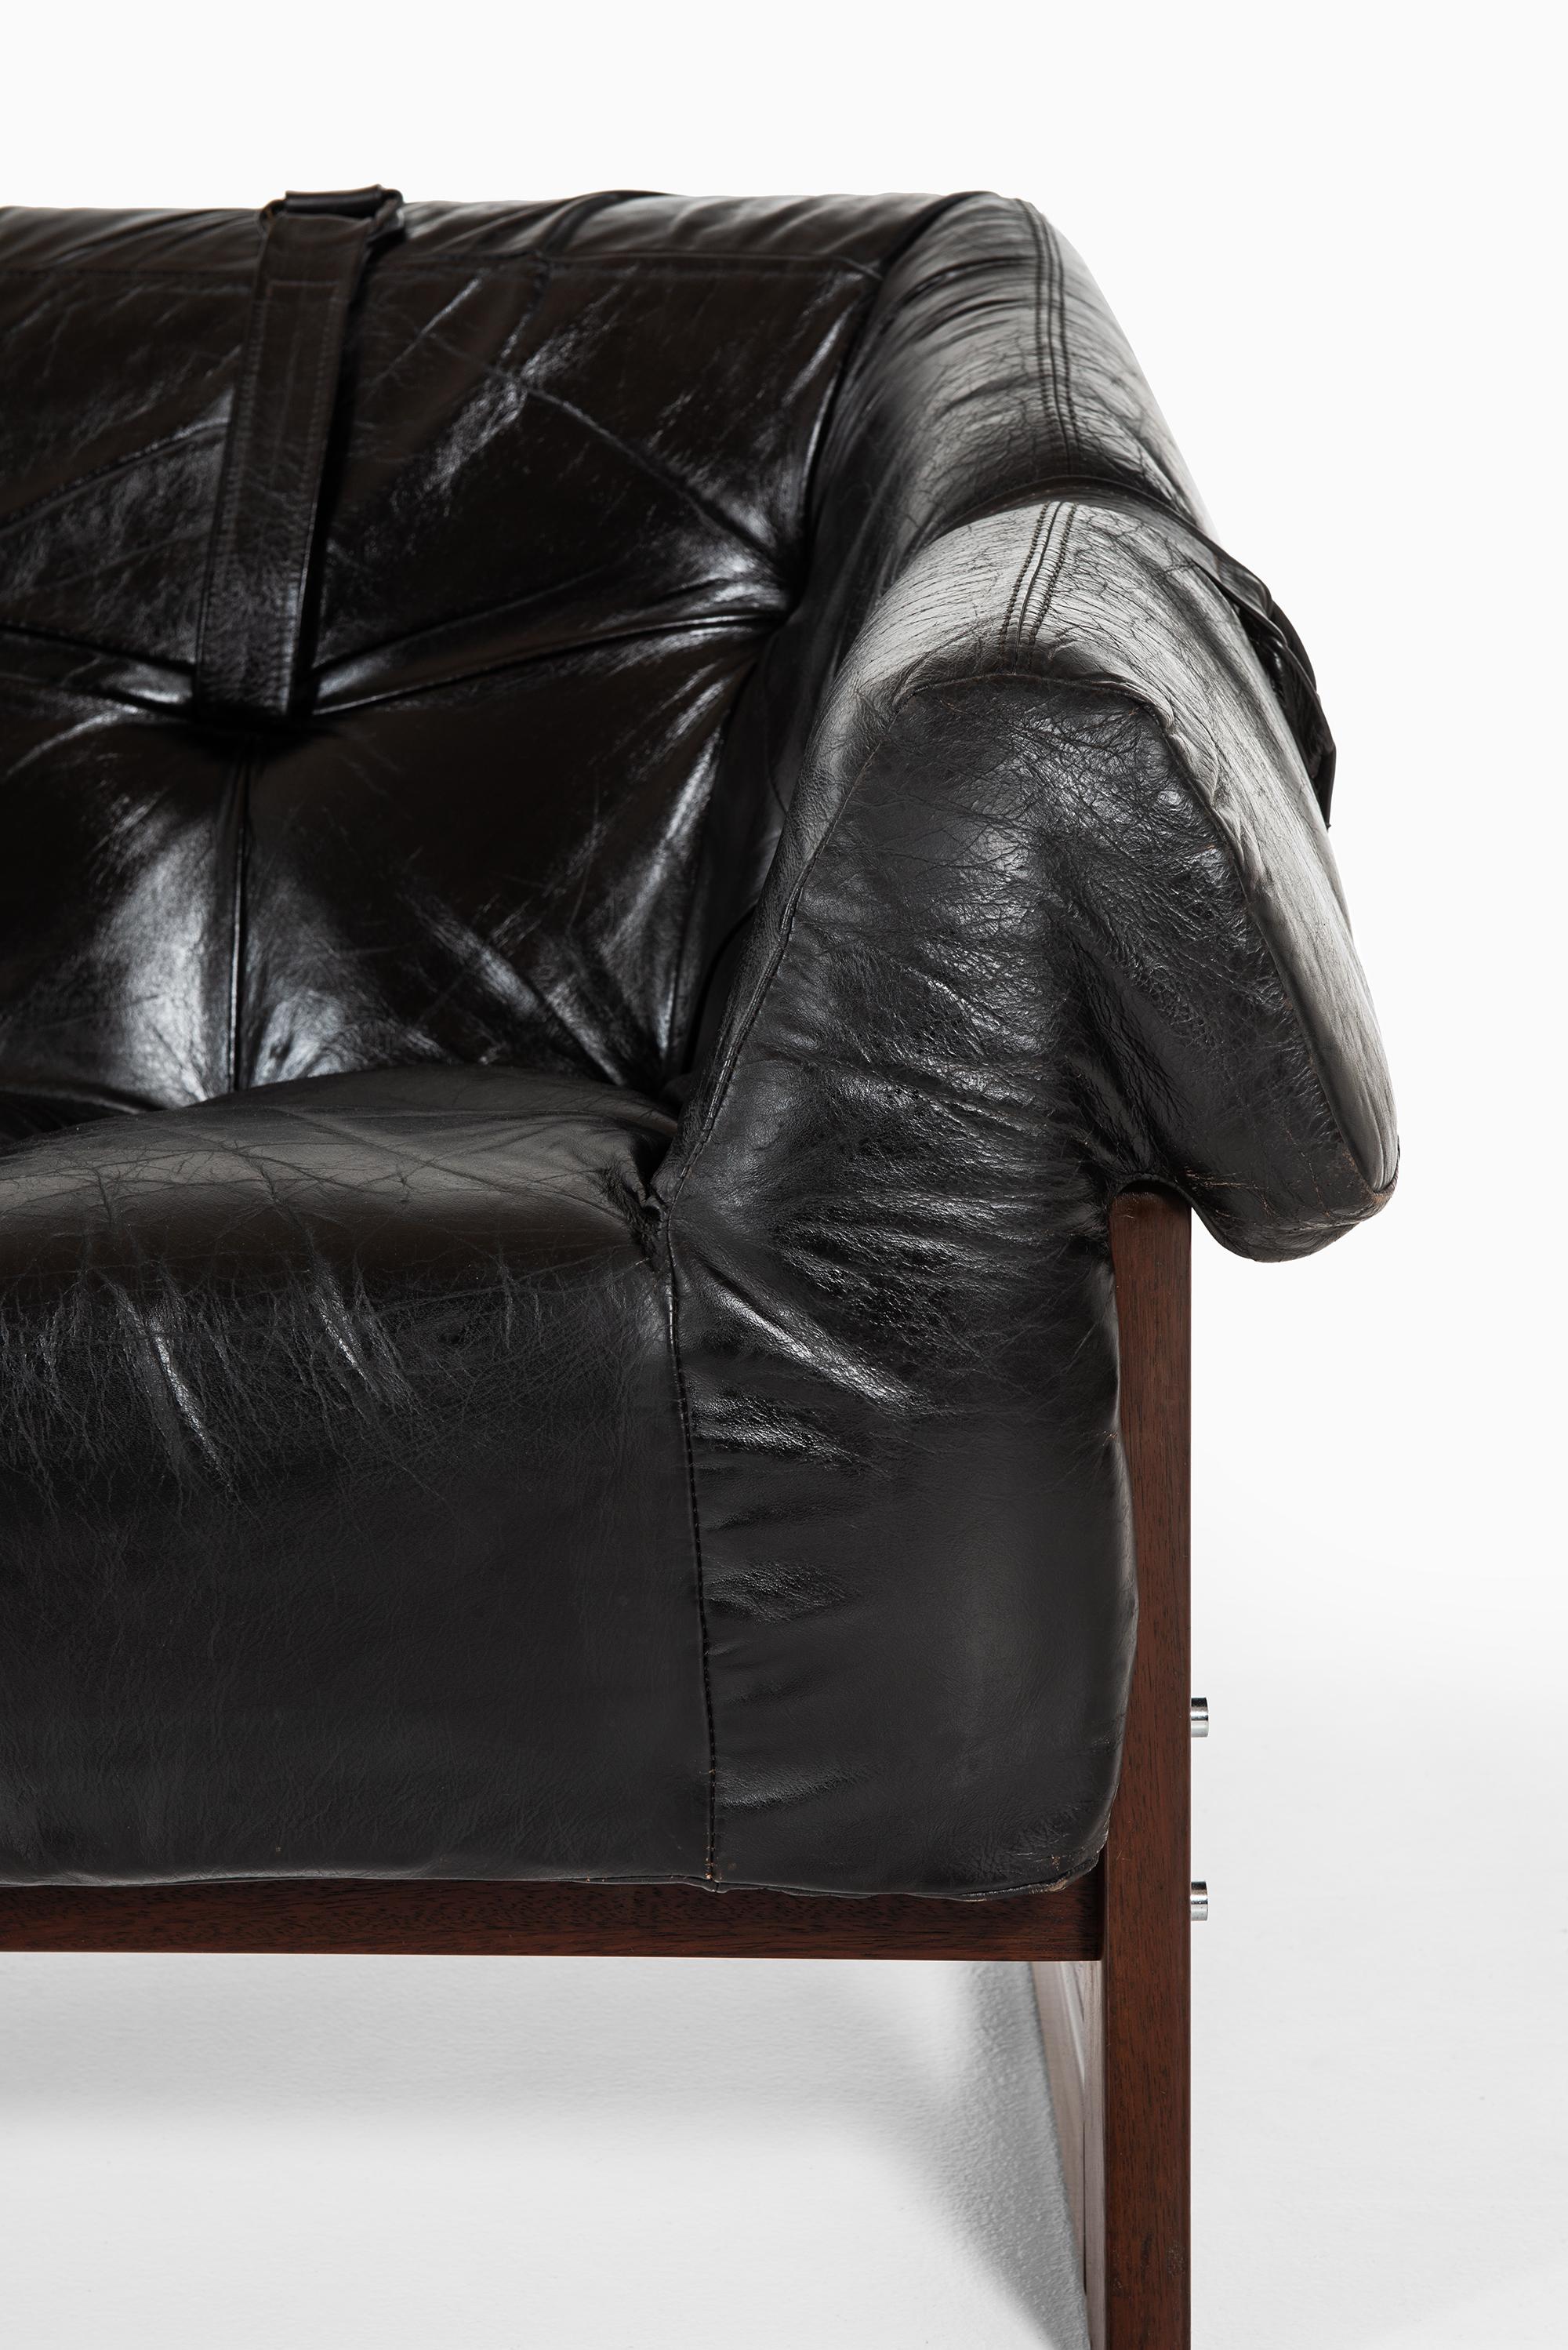 Rare 3-seat sofa model MP-091 designed by Percival Lafer. Produced by Lafer MP in Brazil.